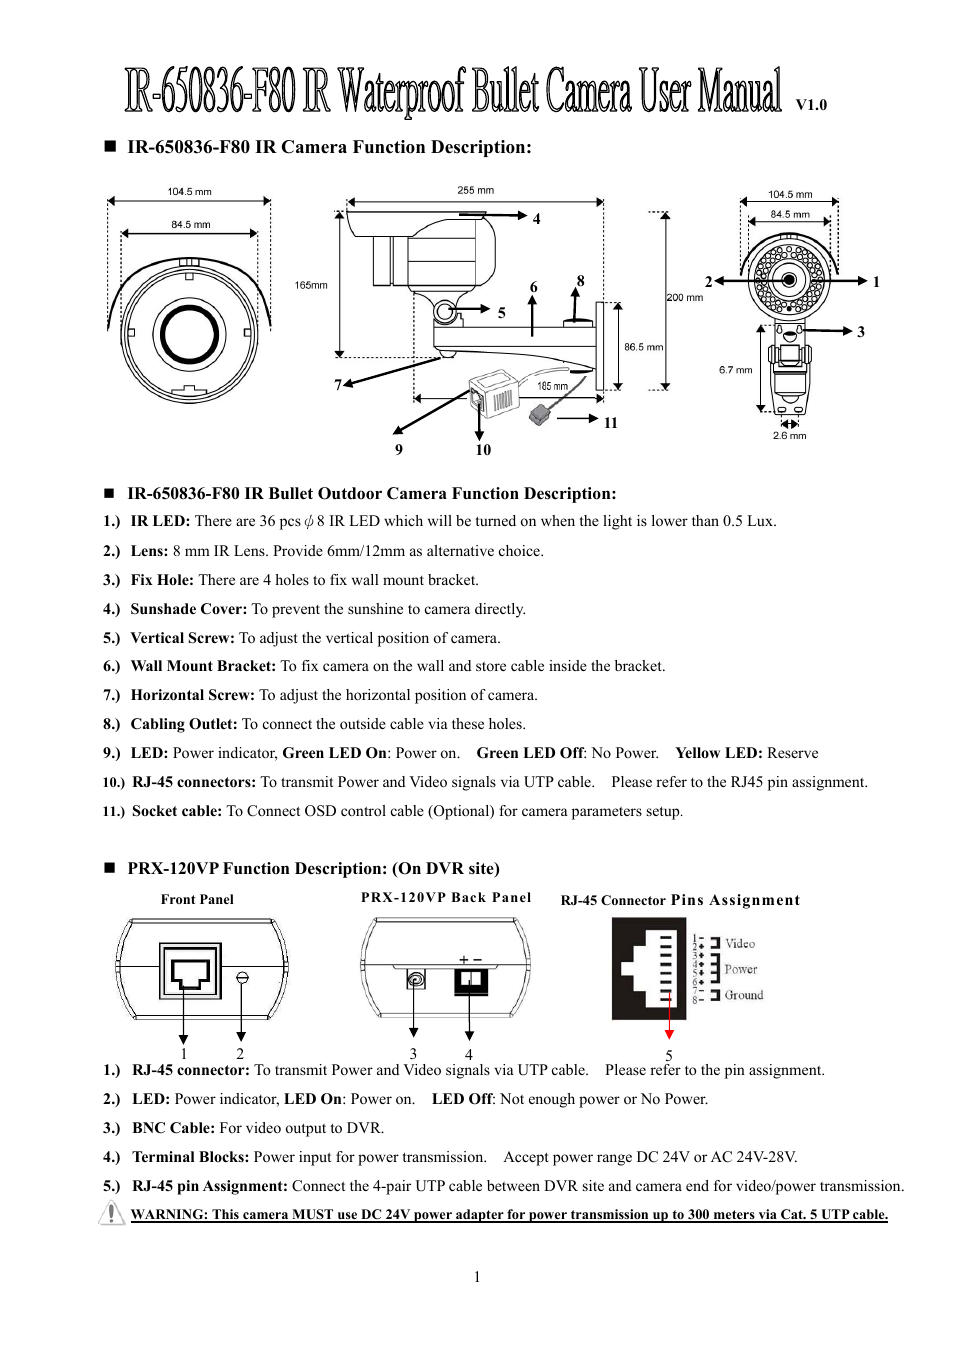 IR-650836-F80 IR Bullet Waterproof UTP Camera (Page 1)